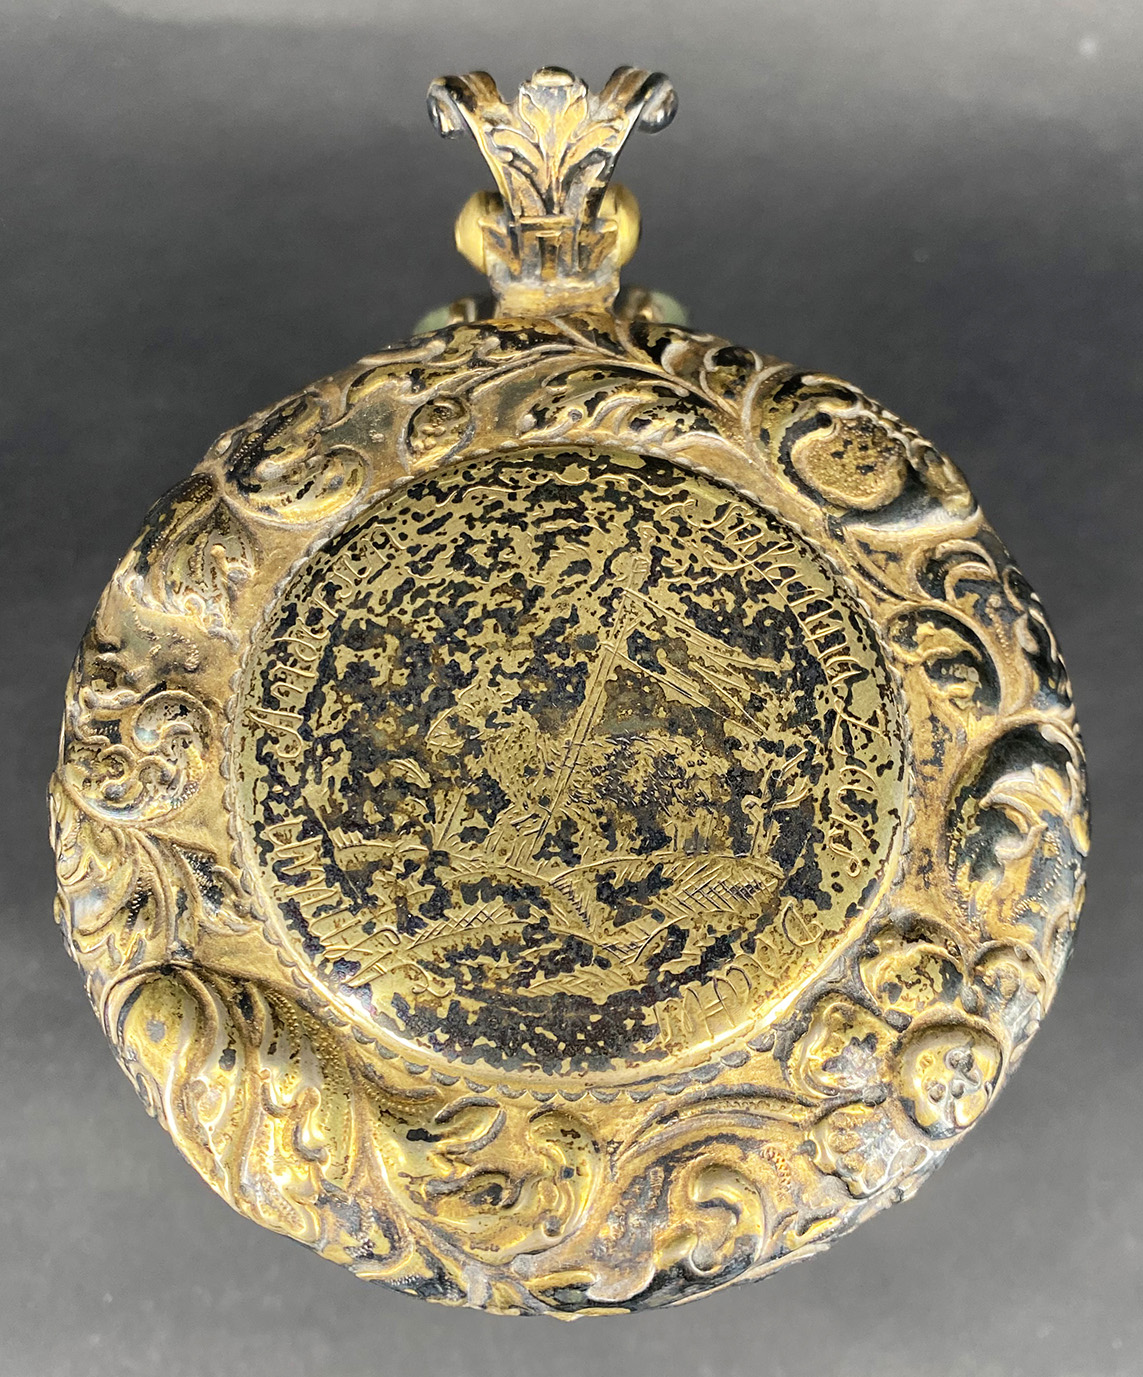 Barocker Walzenkrug, 18. Jh., Glaskrug mit Silberdeckel, innen vergoldet: zylindrischer, farbloser - Image 10 of 10